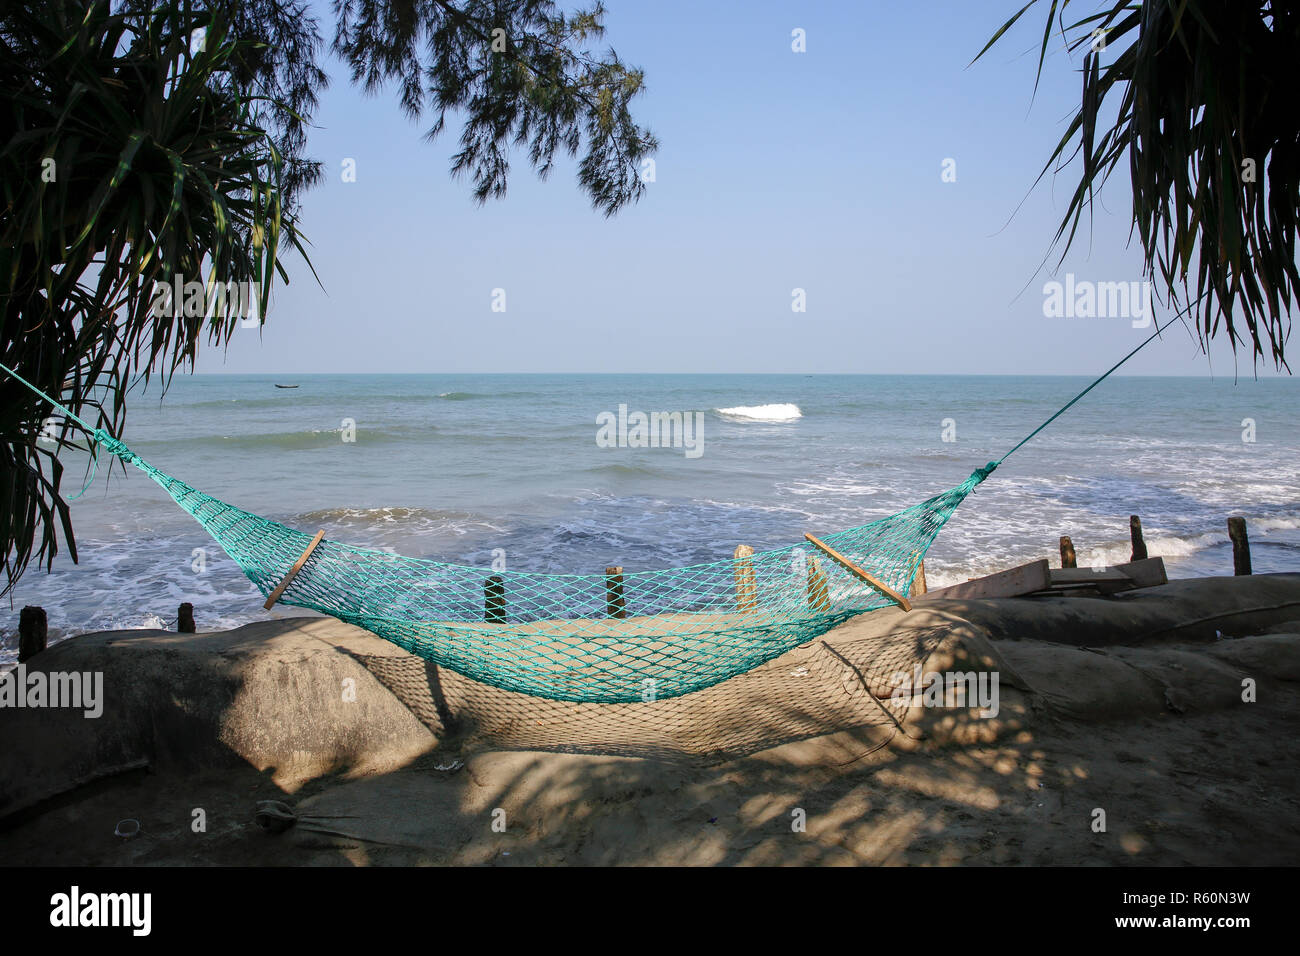 An empty hammock hangs beside a sea beach at Saint Martin Island. Cox’s Bazar, Bangladesh. Stock Photo